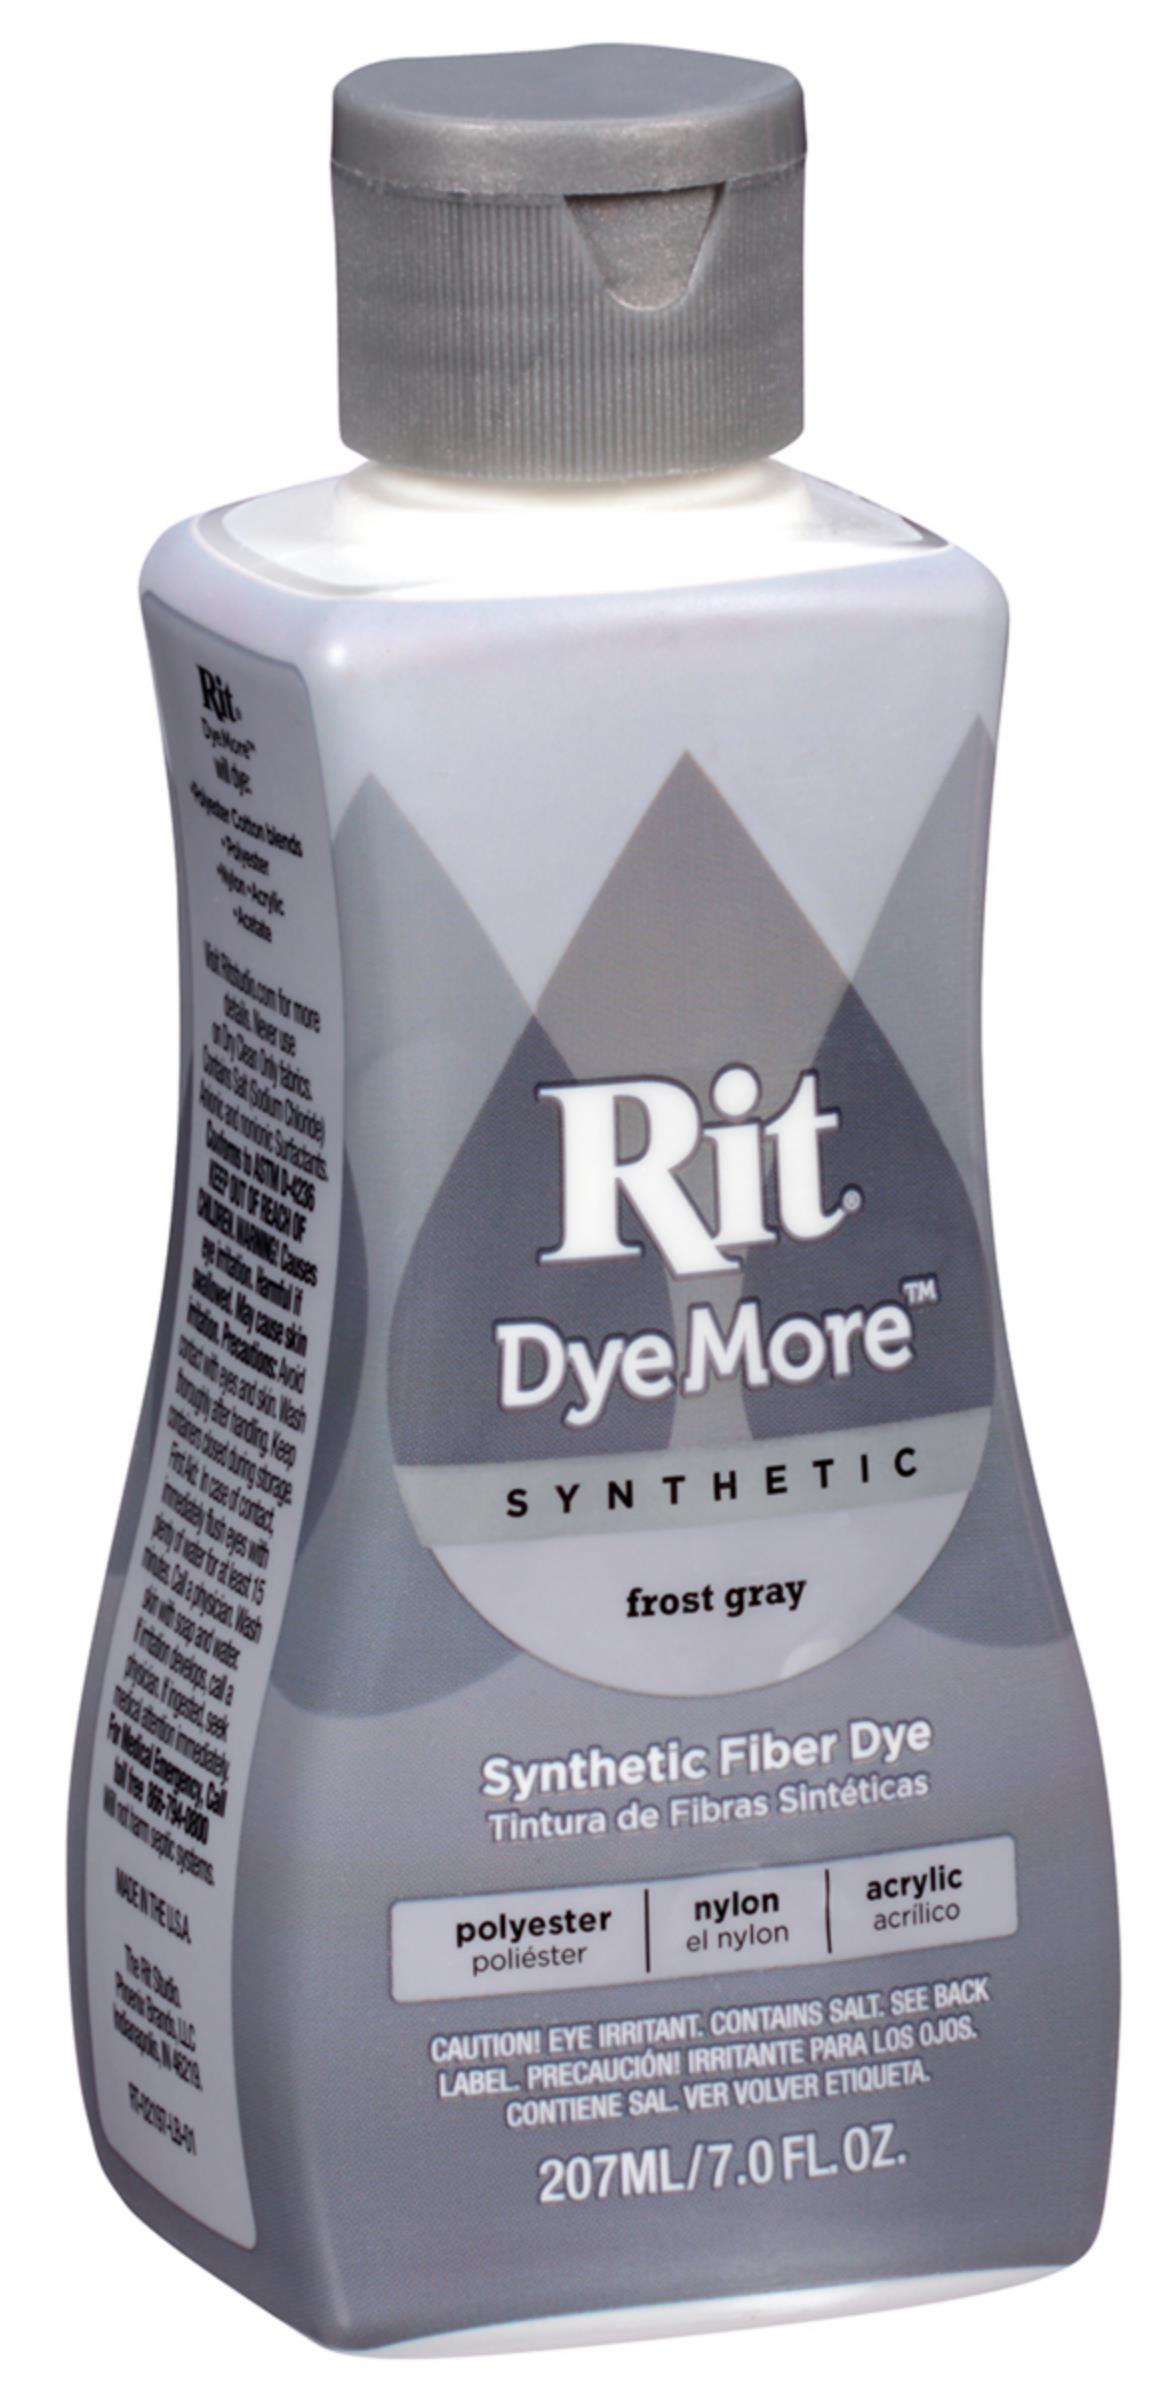 Rit DyeMore Advanced Liquid Dye for Polyester Acrylic Acetate Nylon